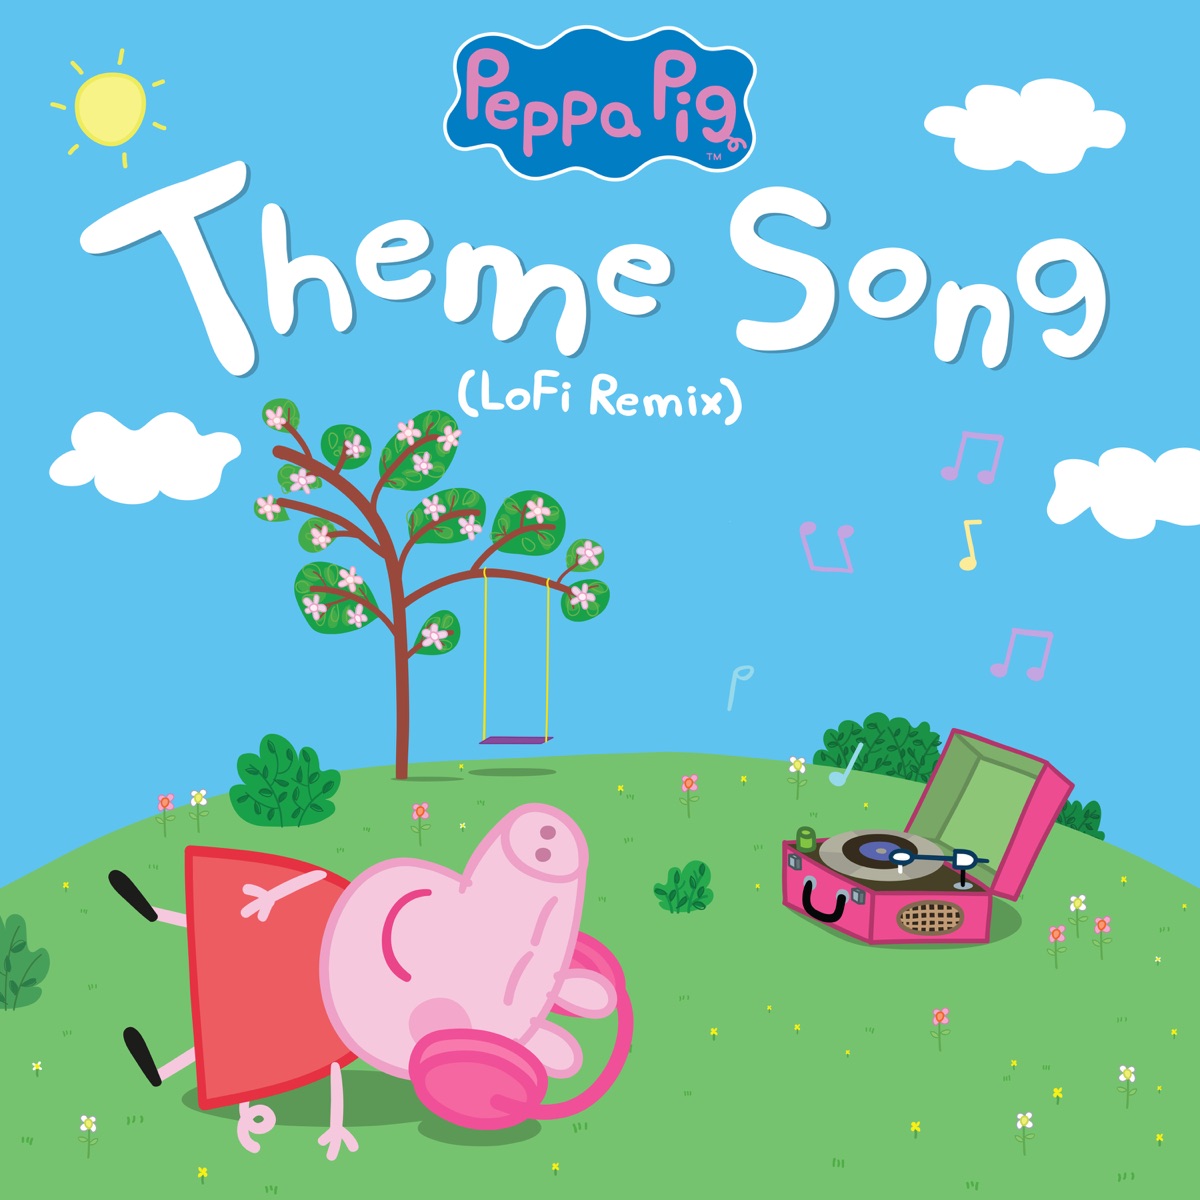 My First Album - Album by Peppa Pig